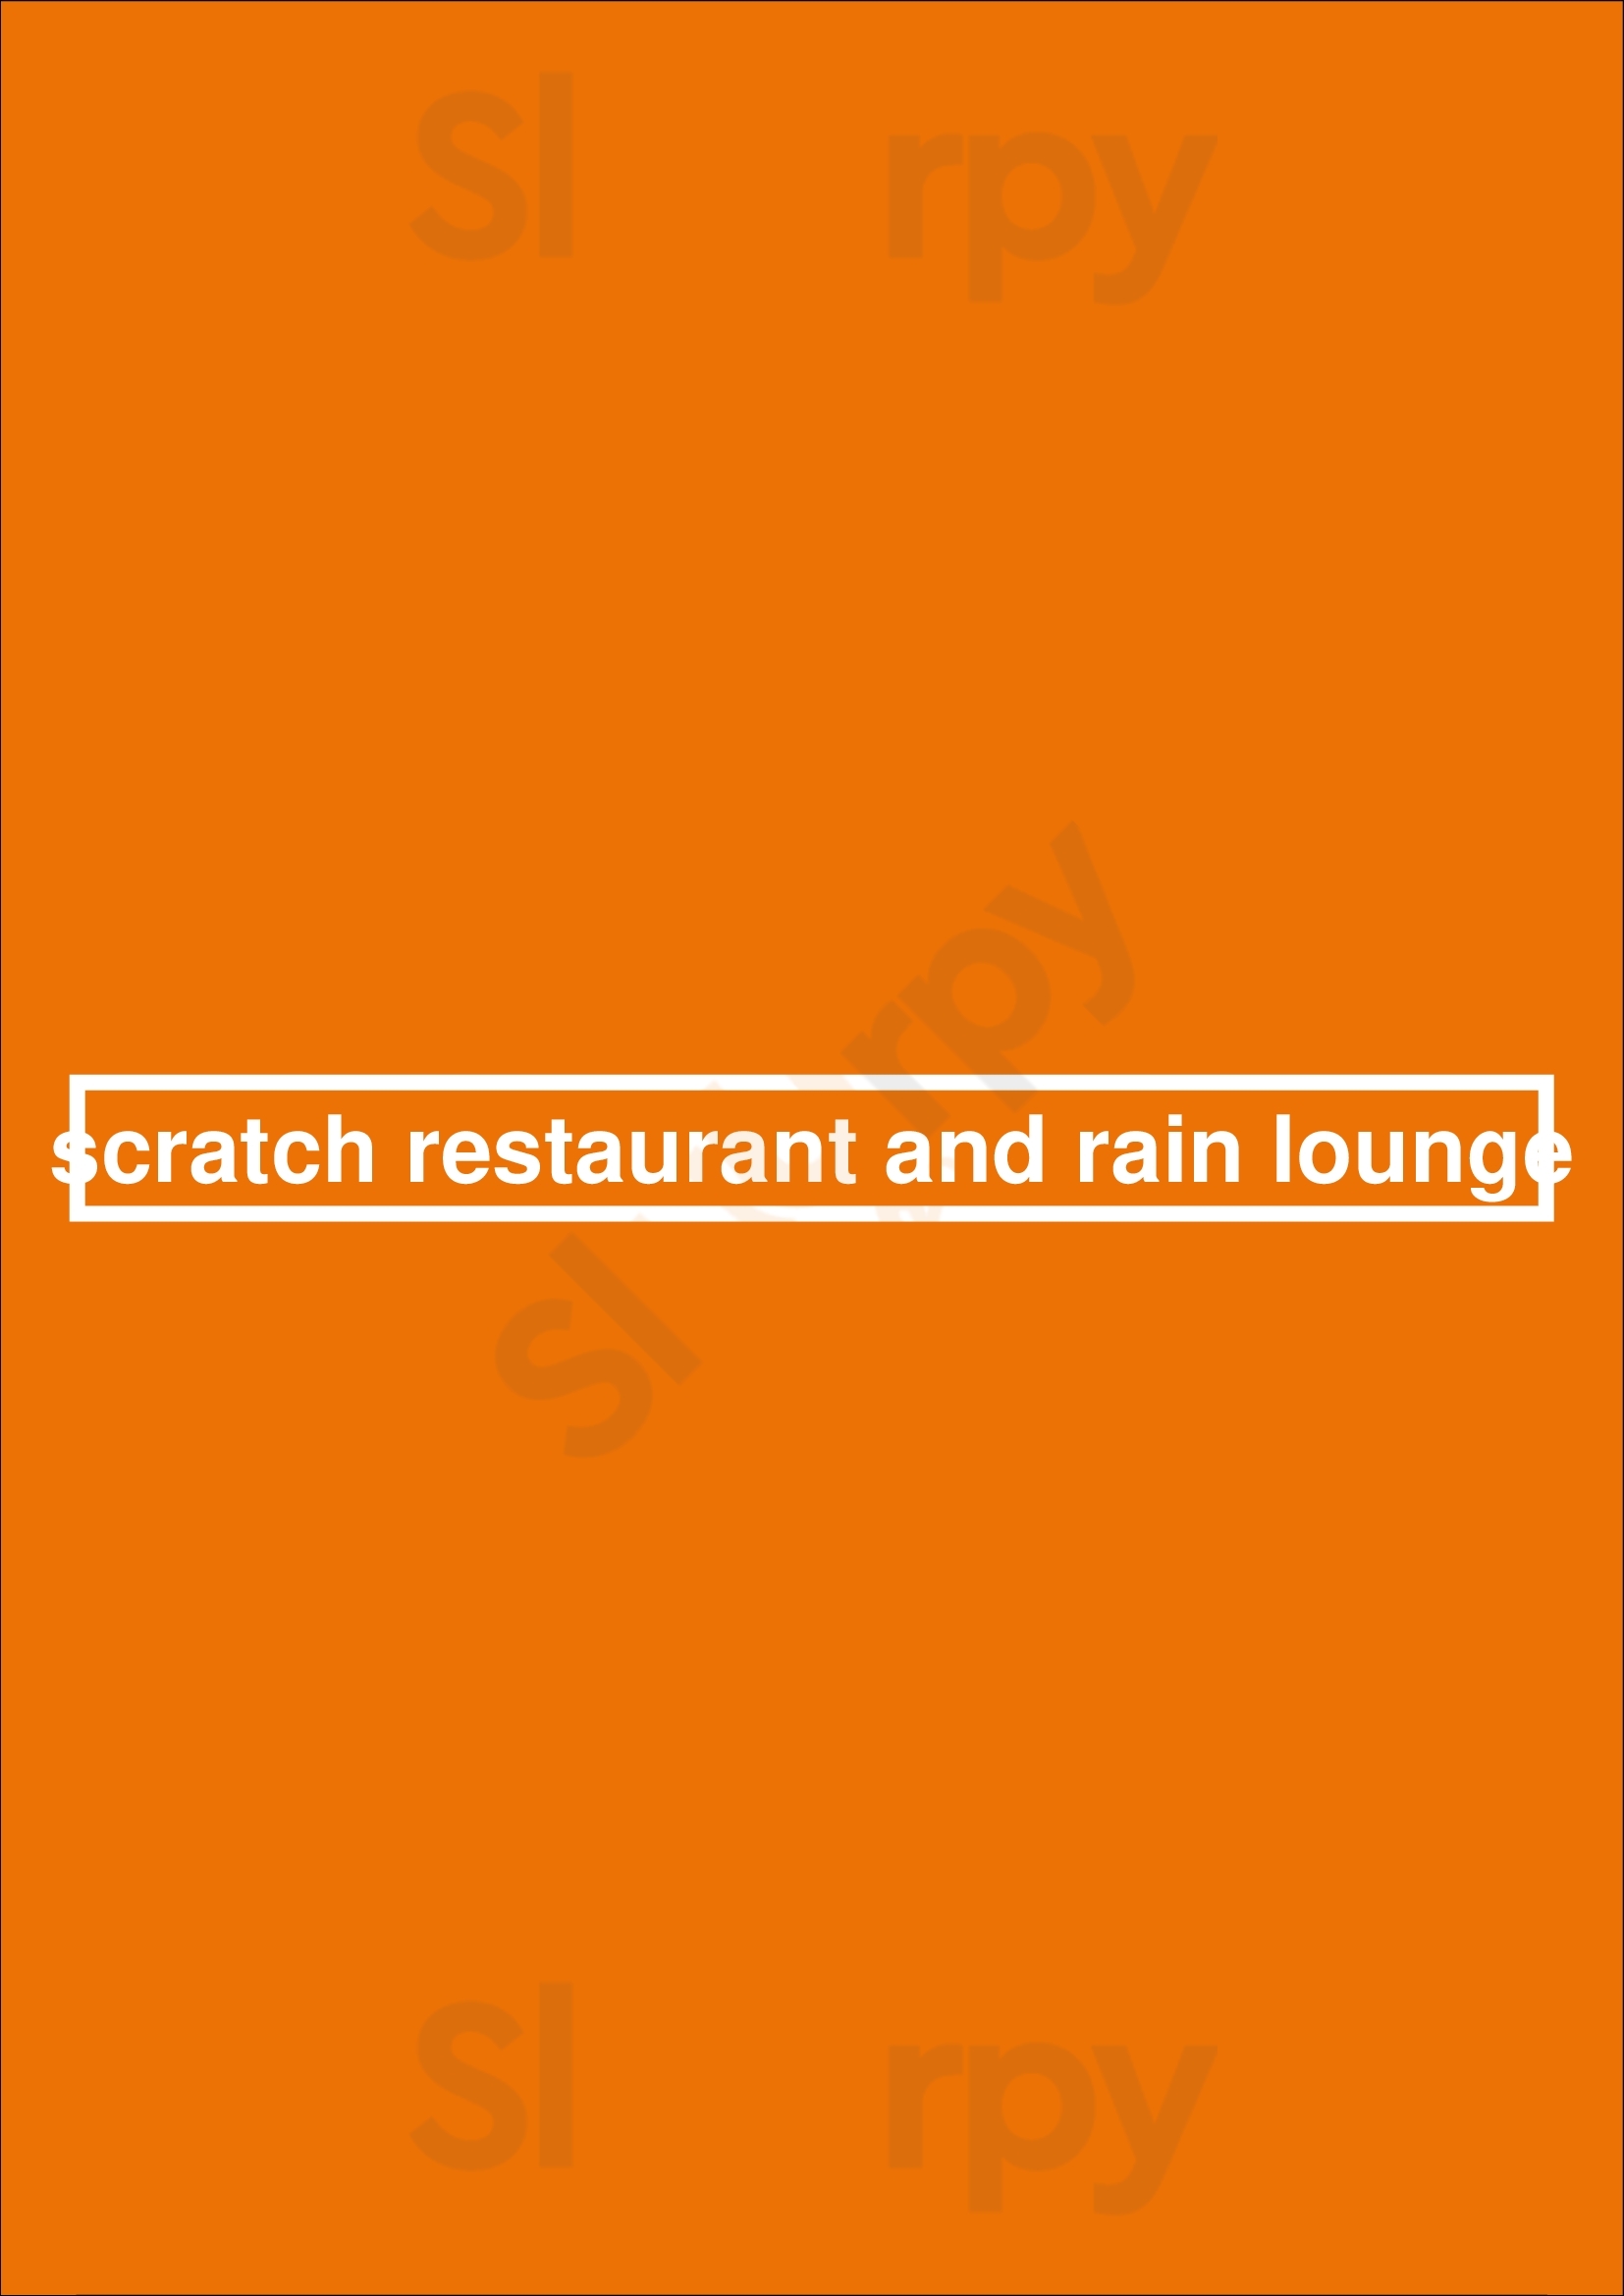 Scratch Restaurant And Rain Lounge Spokane Menu - 1